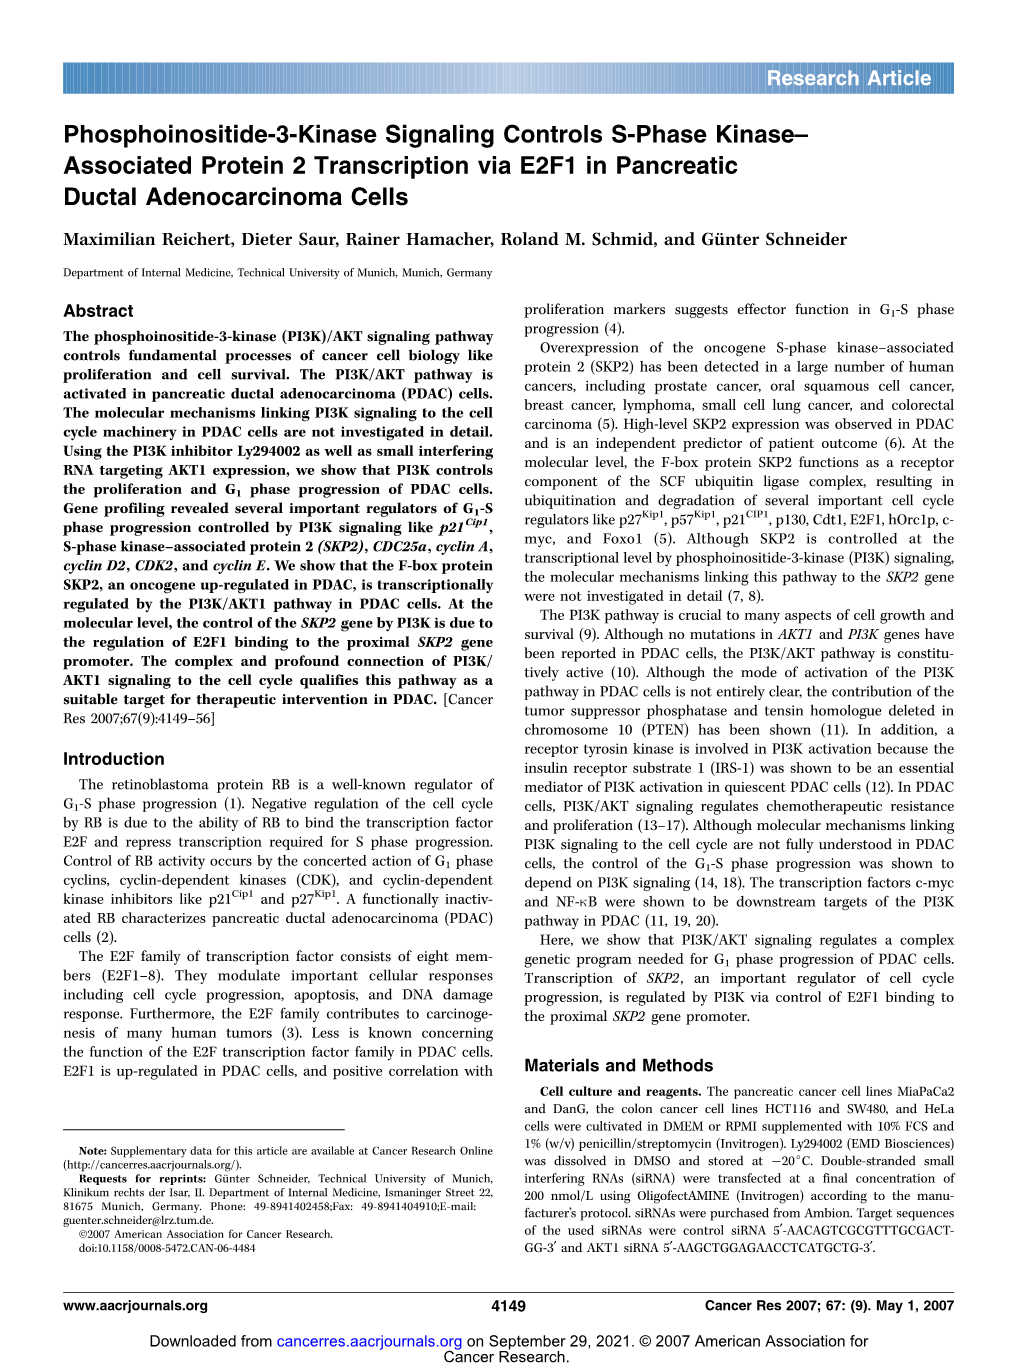 Associated Protein 2 Transcription Via E2F1 in Pancreatic Ductal Adenocarcinoma Cells Maximilian Reichert, Dieter Saur, Rainer Hamacher, Roland M